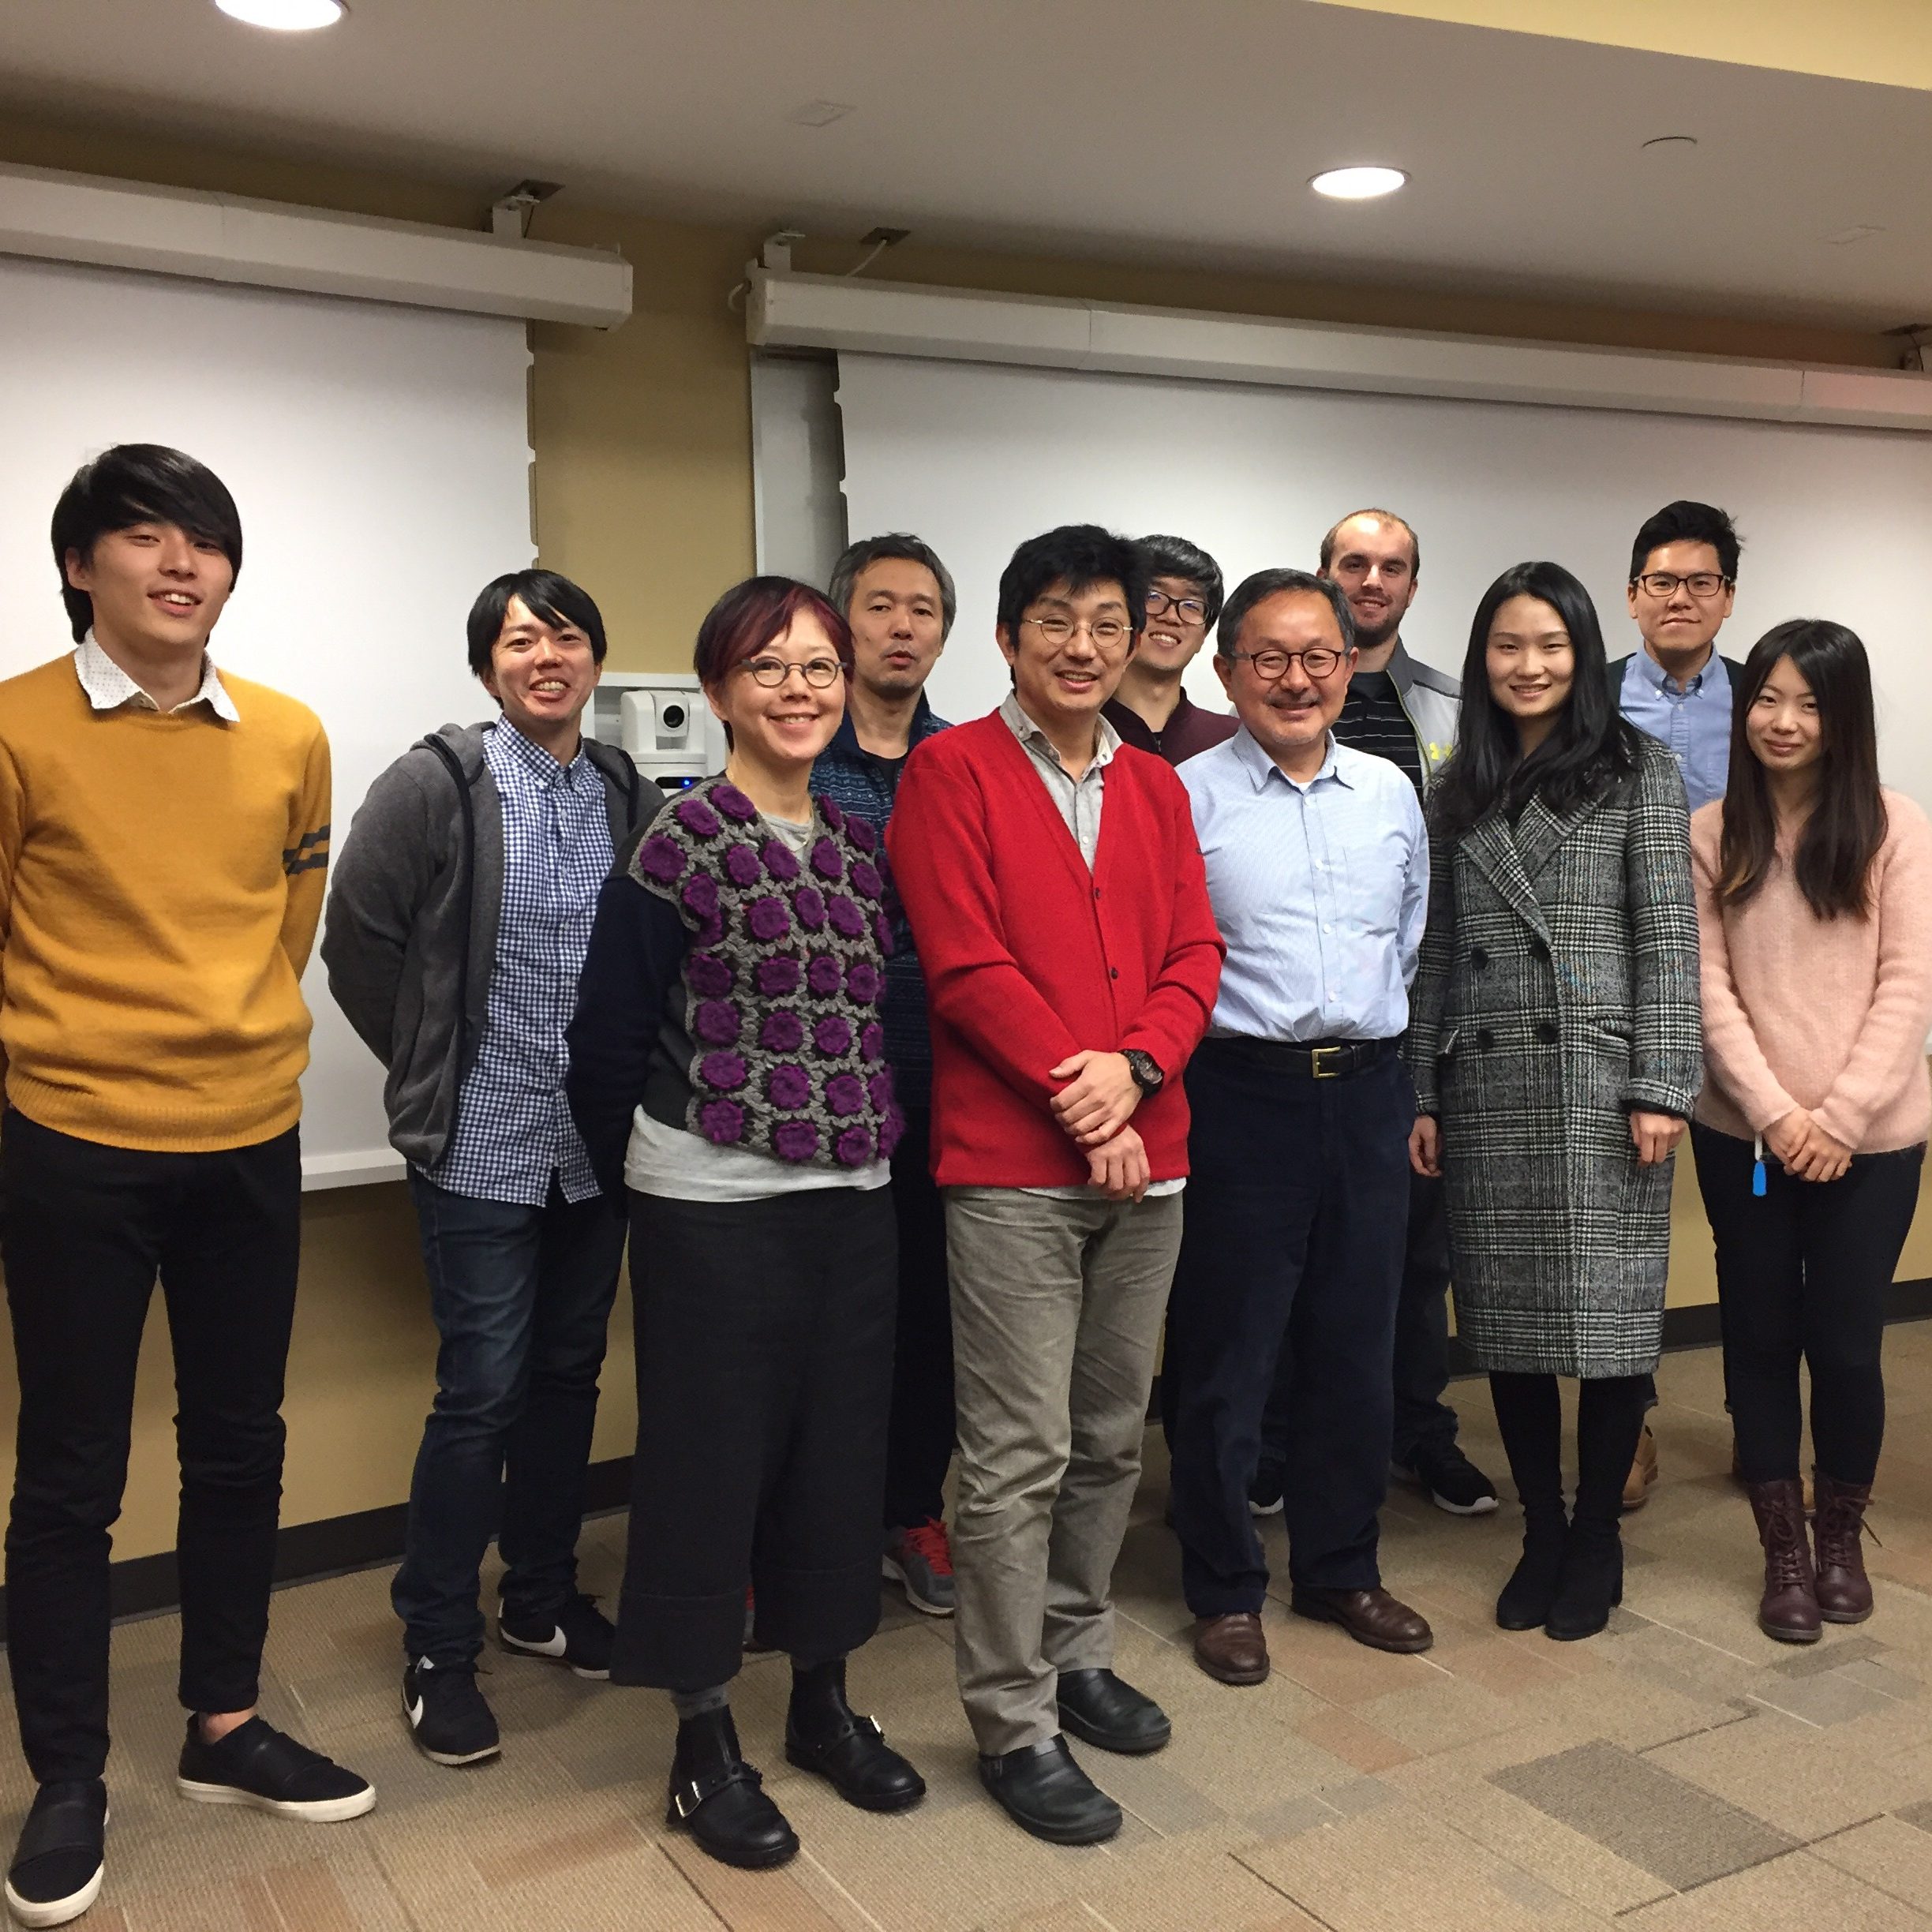 A research meeting with Japanese colleagues including Professors Masami Yamaguchi, So Kanazawa, and Katsumi Watanabe.